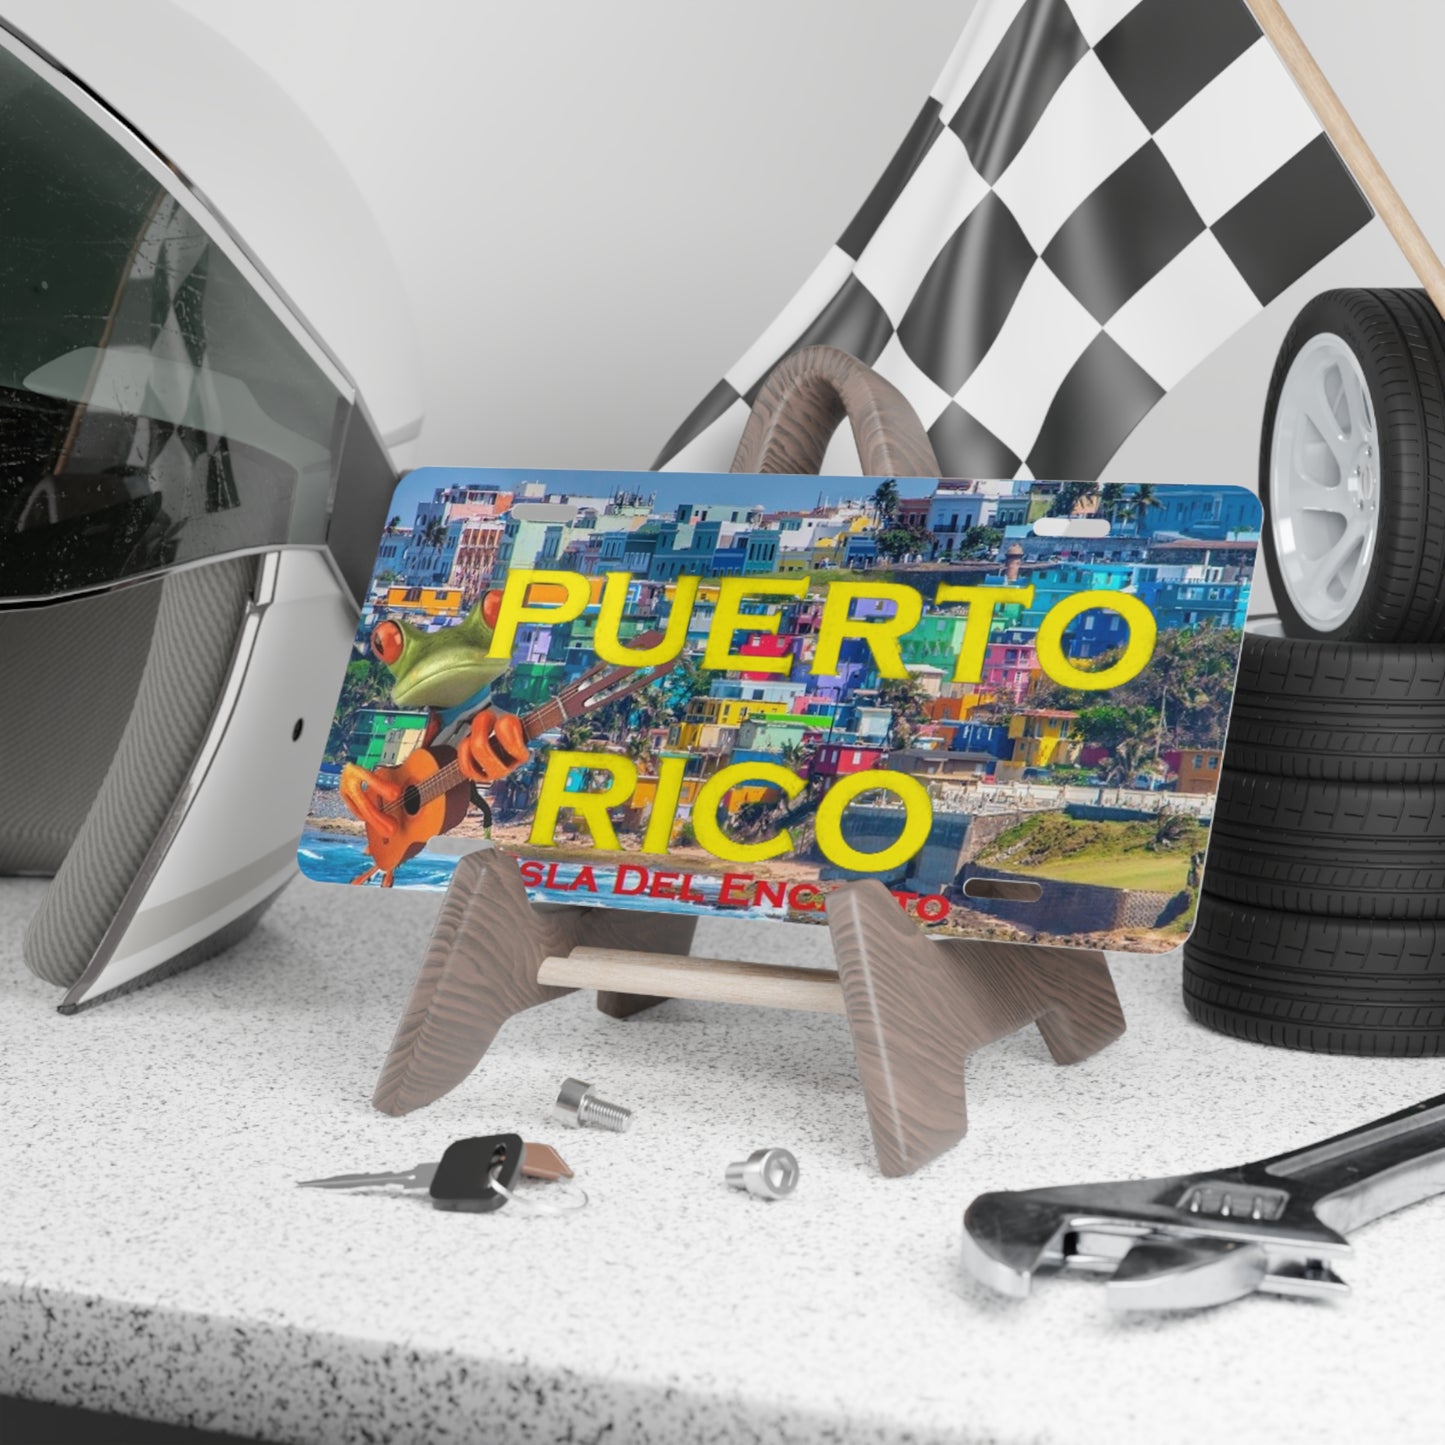 Puerto Rico Musical Frog Vanity License Plate